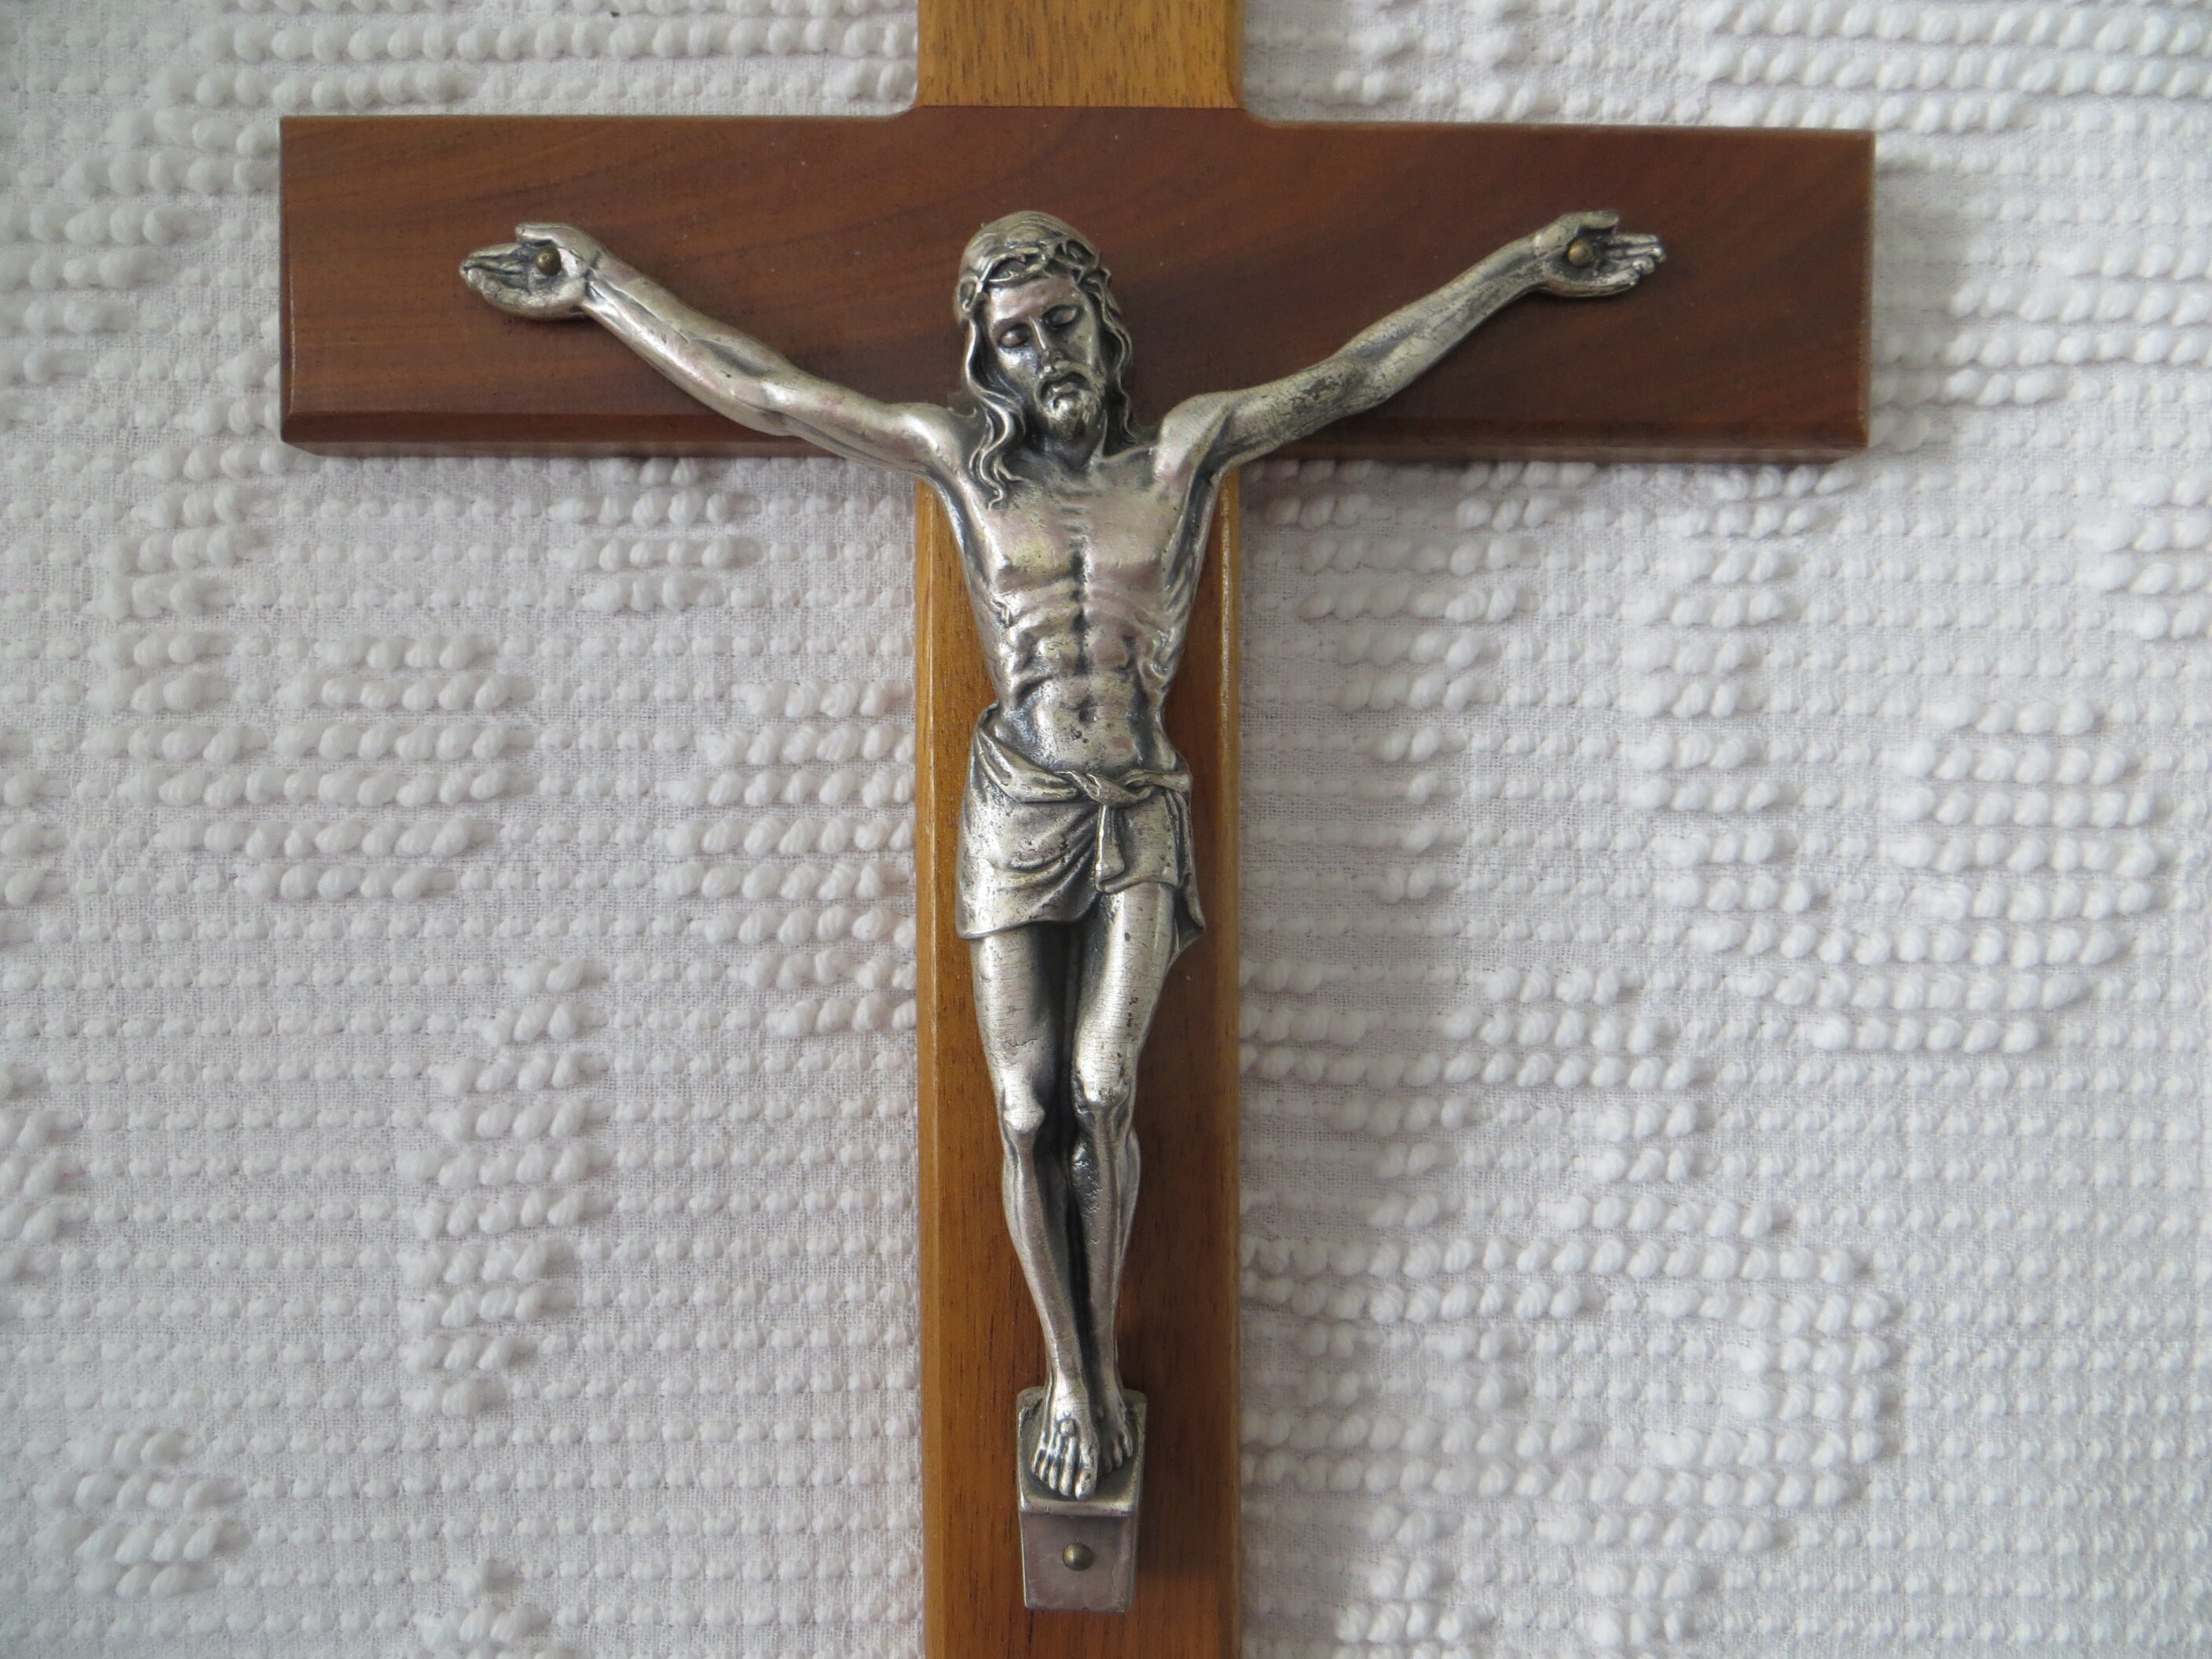 15 Religious Wooden Crucifix Wall Cross in Laredo, TX